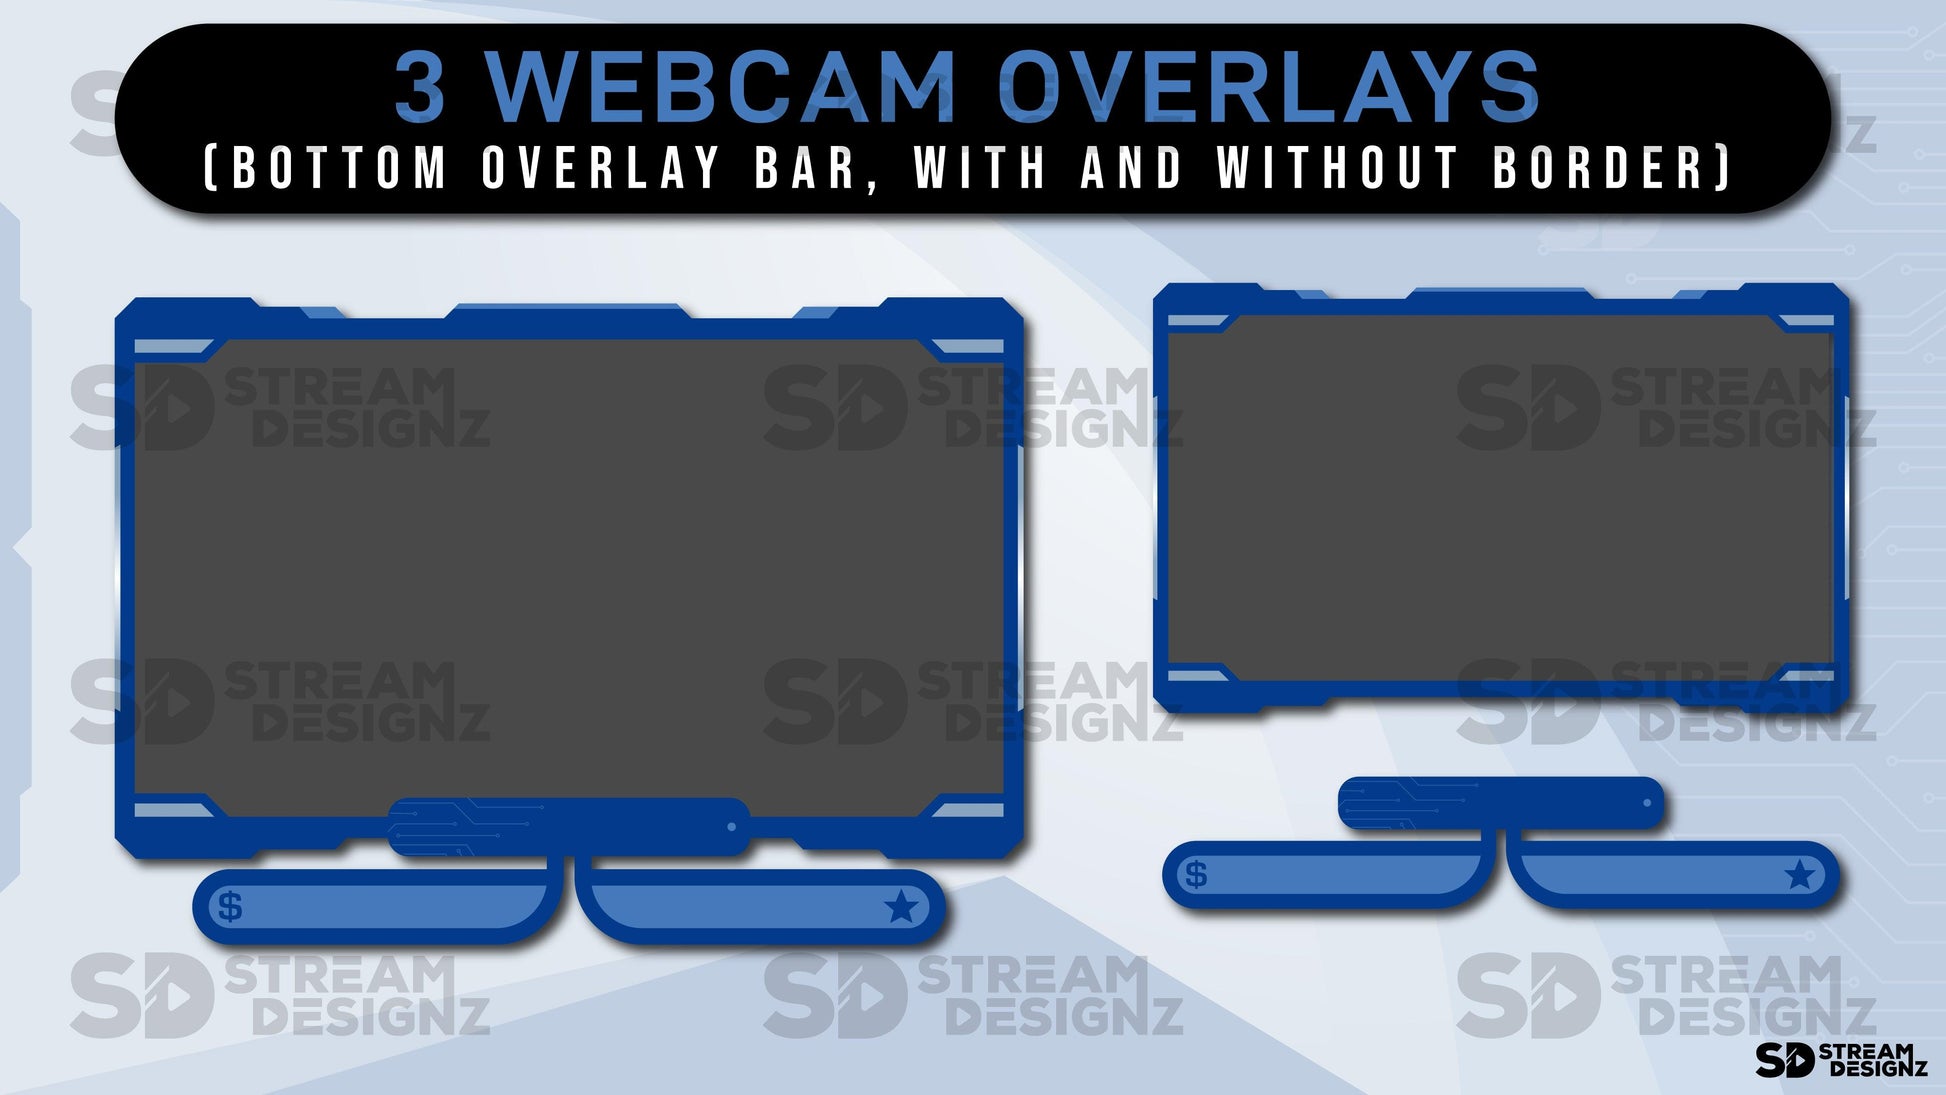 static stream overlay package 3 webcam overlays high tech stream designz